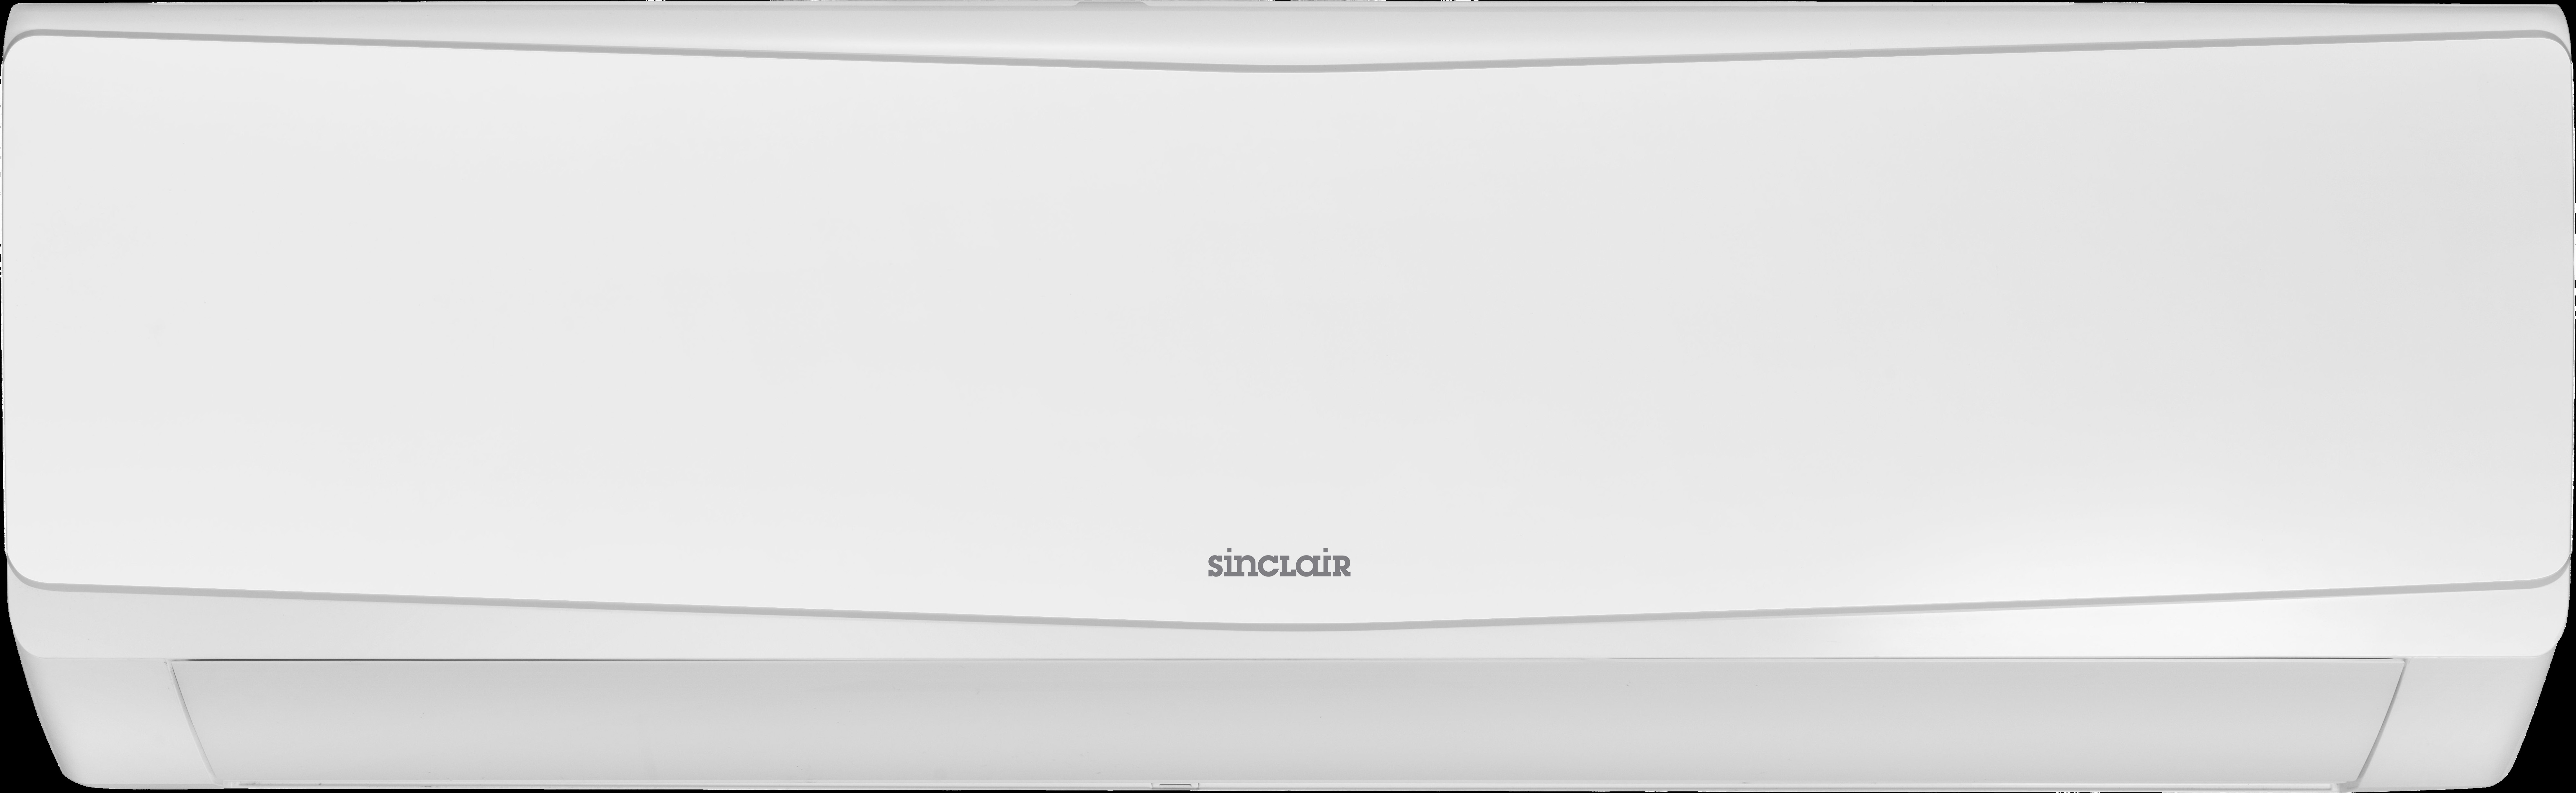 Sinclair SIH-09BIK Keyon Wall Mounted Indoor Unit 2.5kW R32 Wifi Enabled c/w Remote Controller